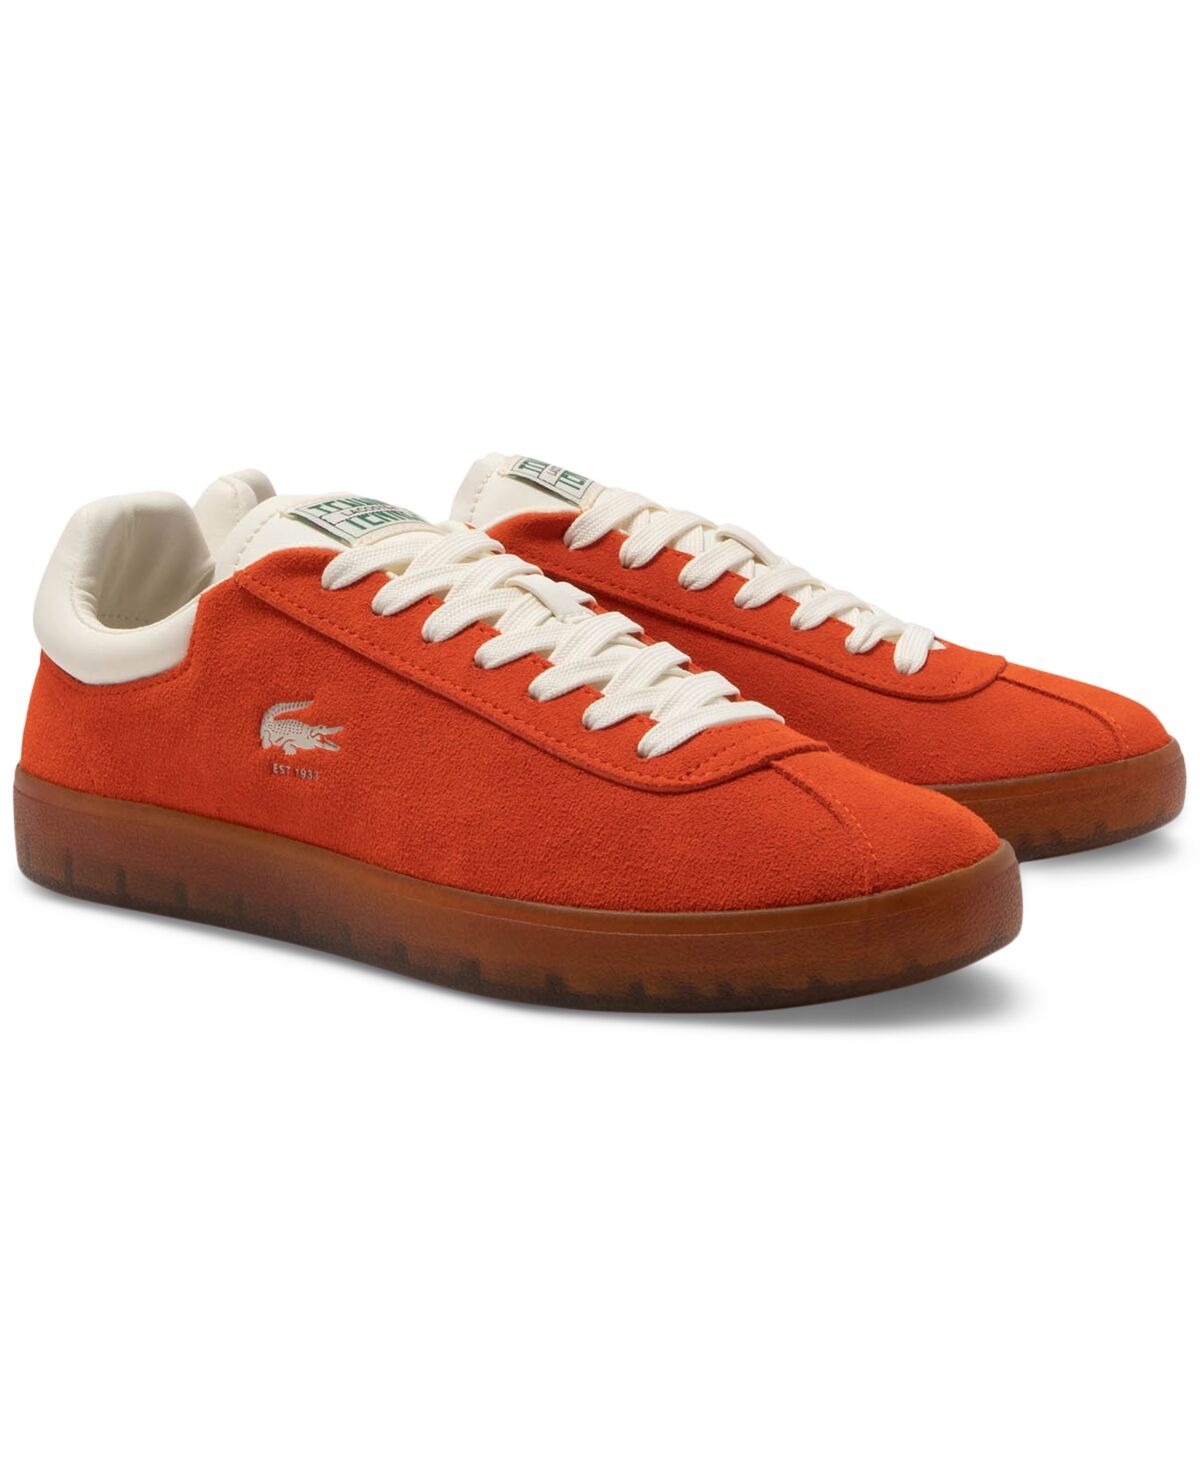 Lacoste Men's Baseshot Lace-Up Court Sneakers - Orange/Gum